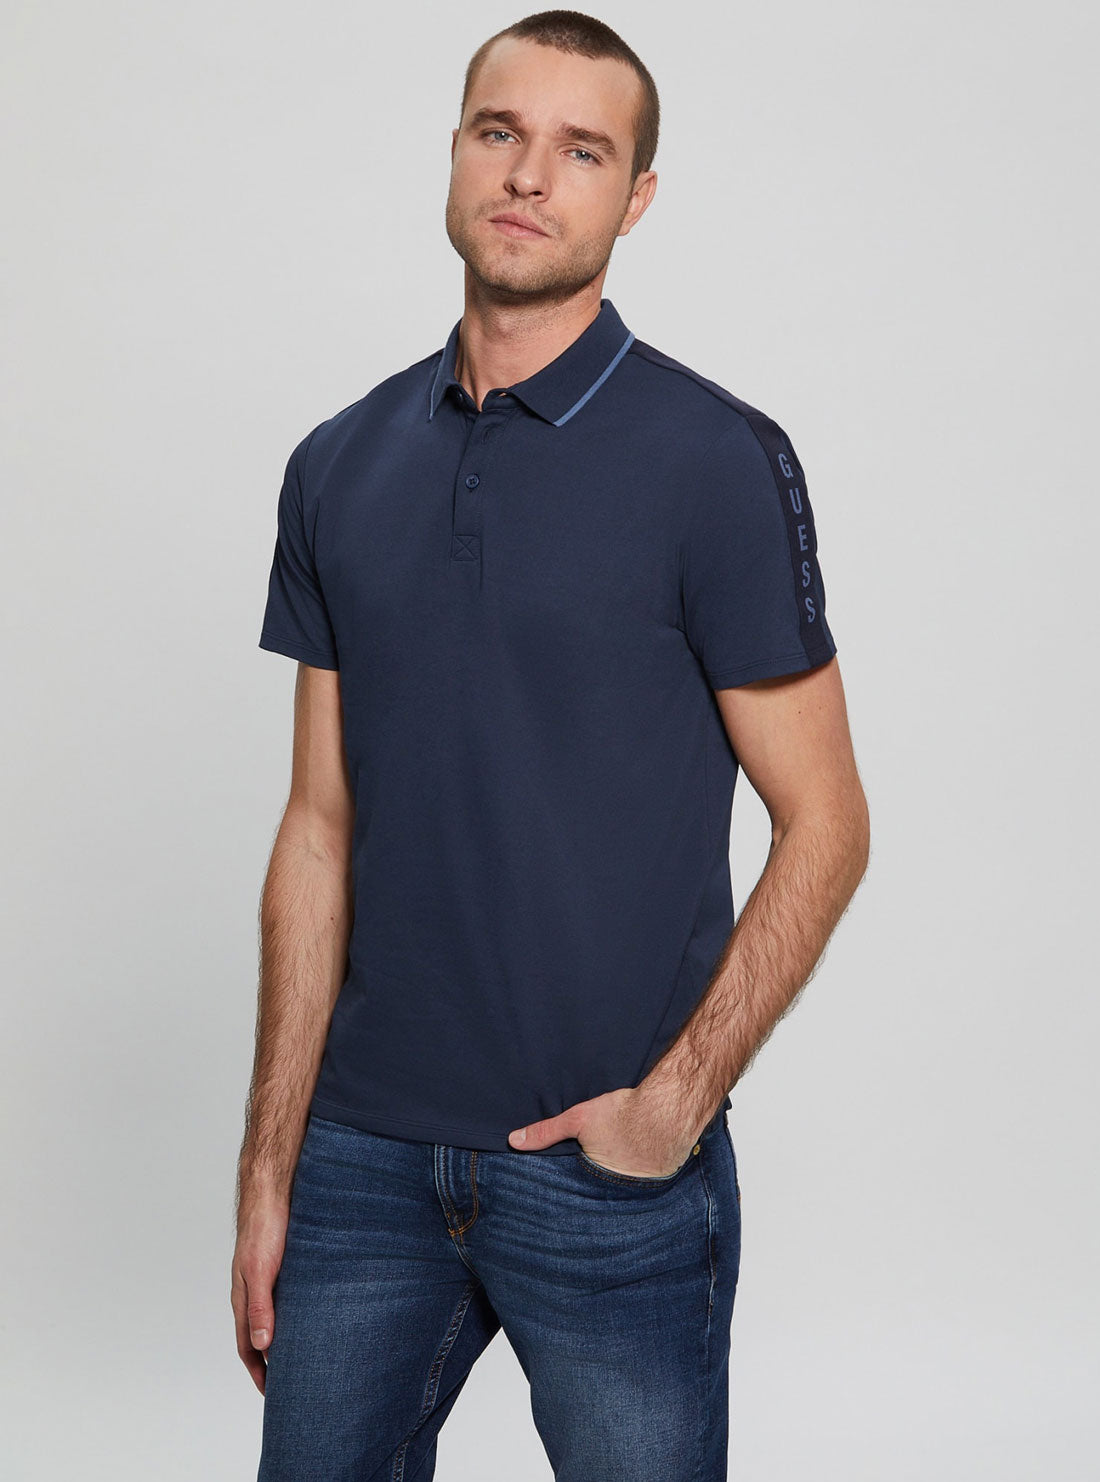 Navy Blue Paul Pique Tape Polo T-Shirt | GUESS Men's Apparel | front view